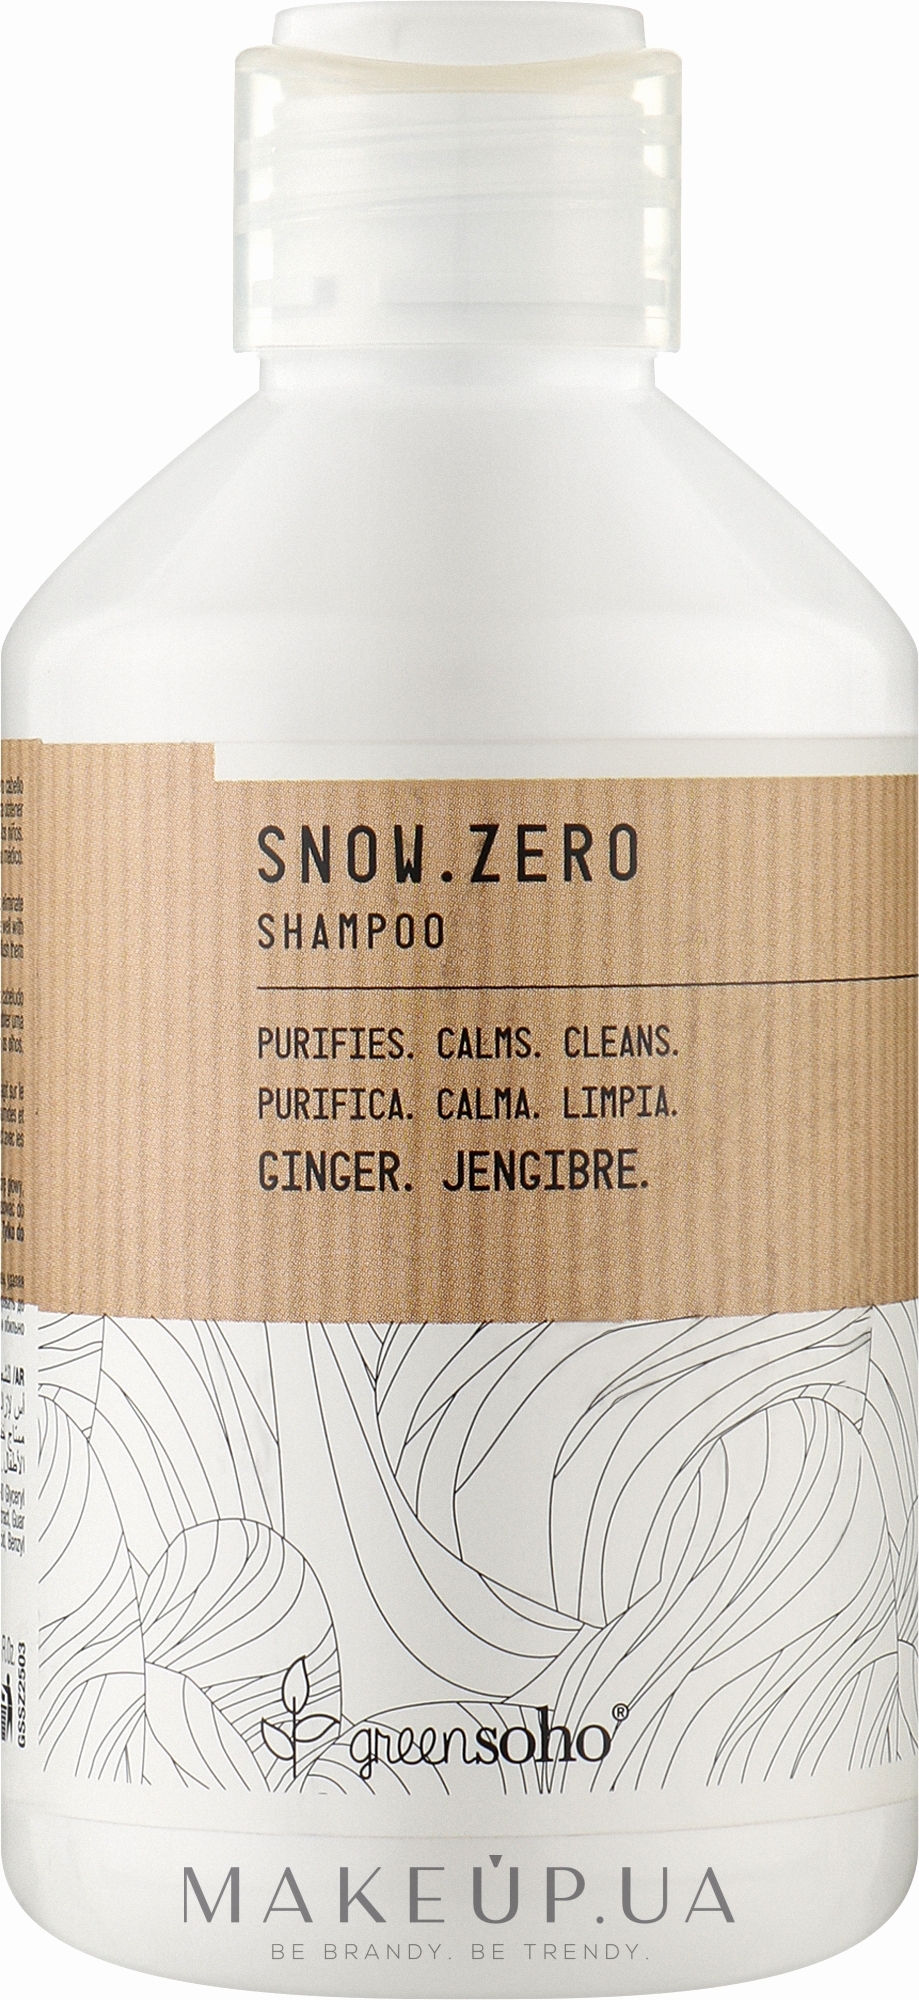 Очищающий шампунь против перхоти - GreenSoho Snow.Zero Shampoo — фото 250ml